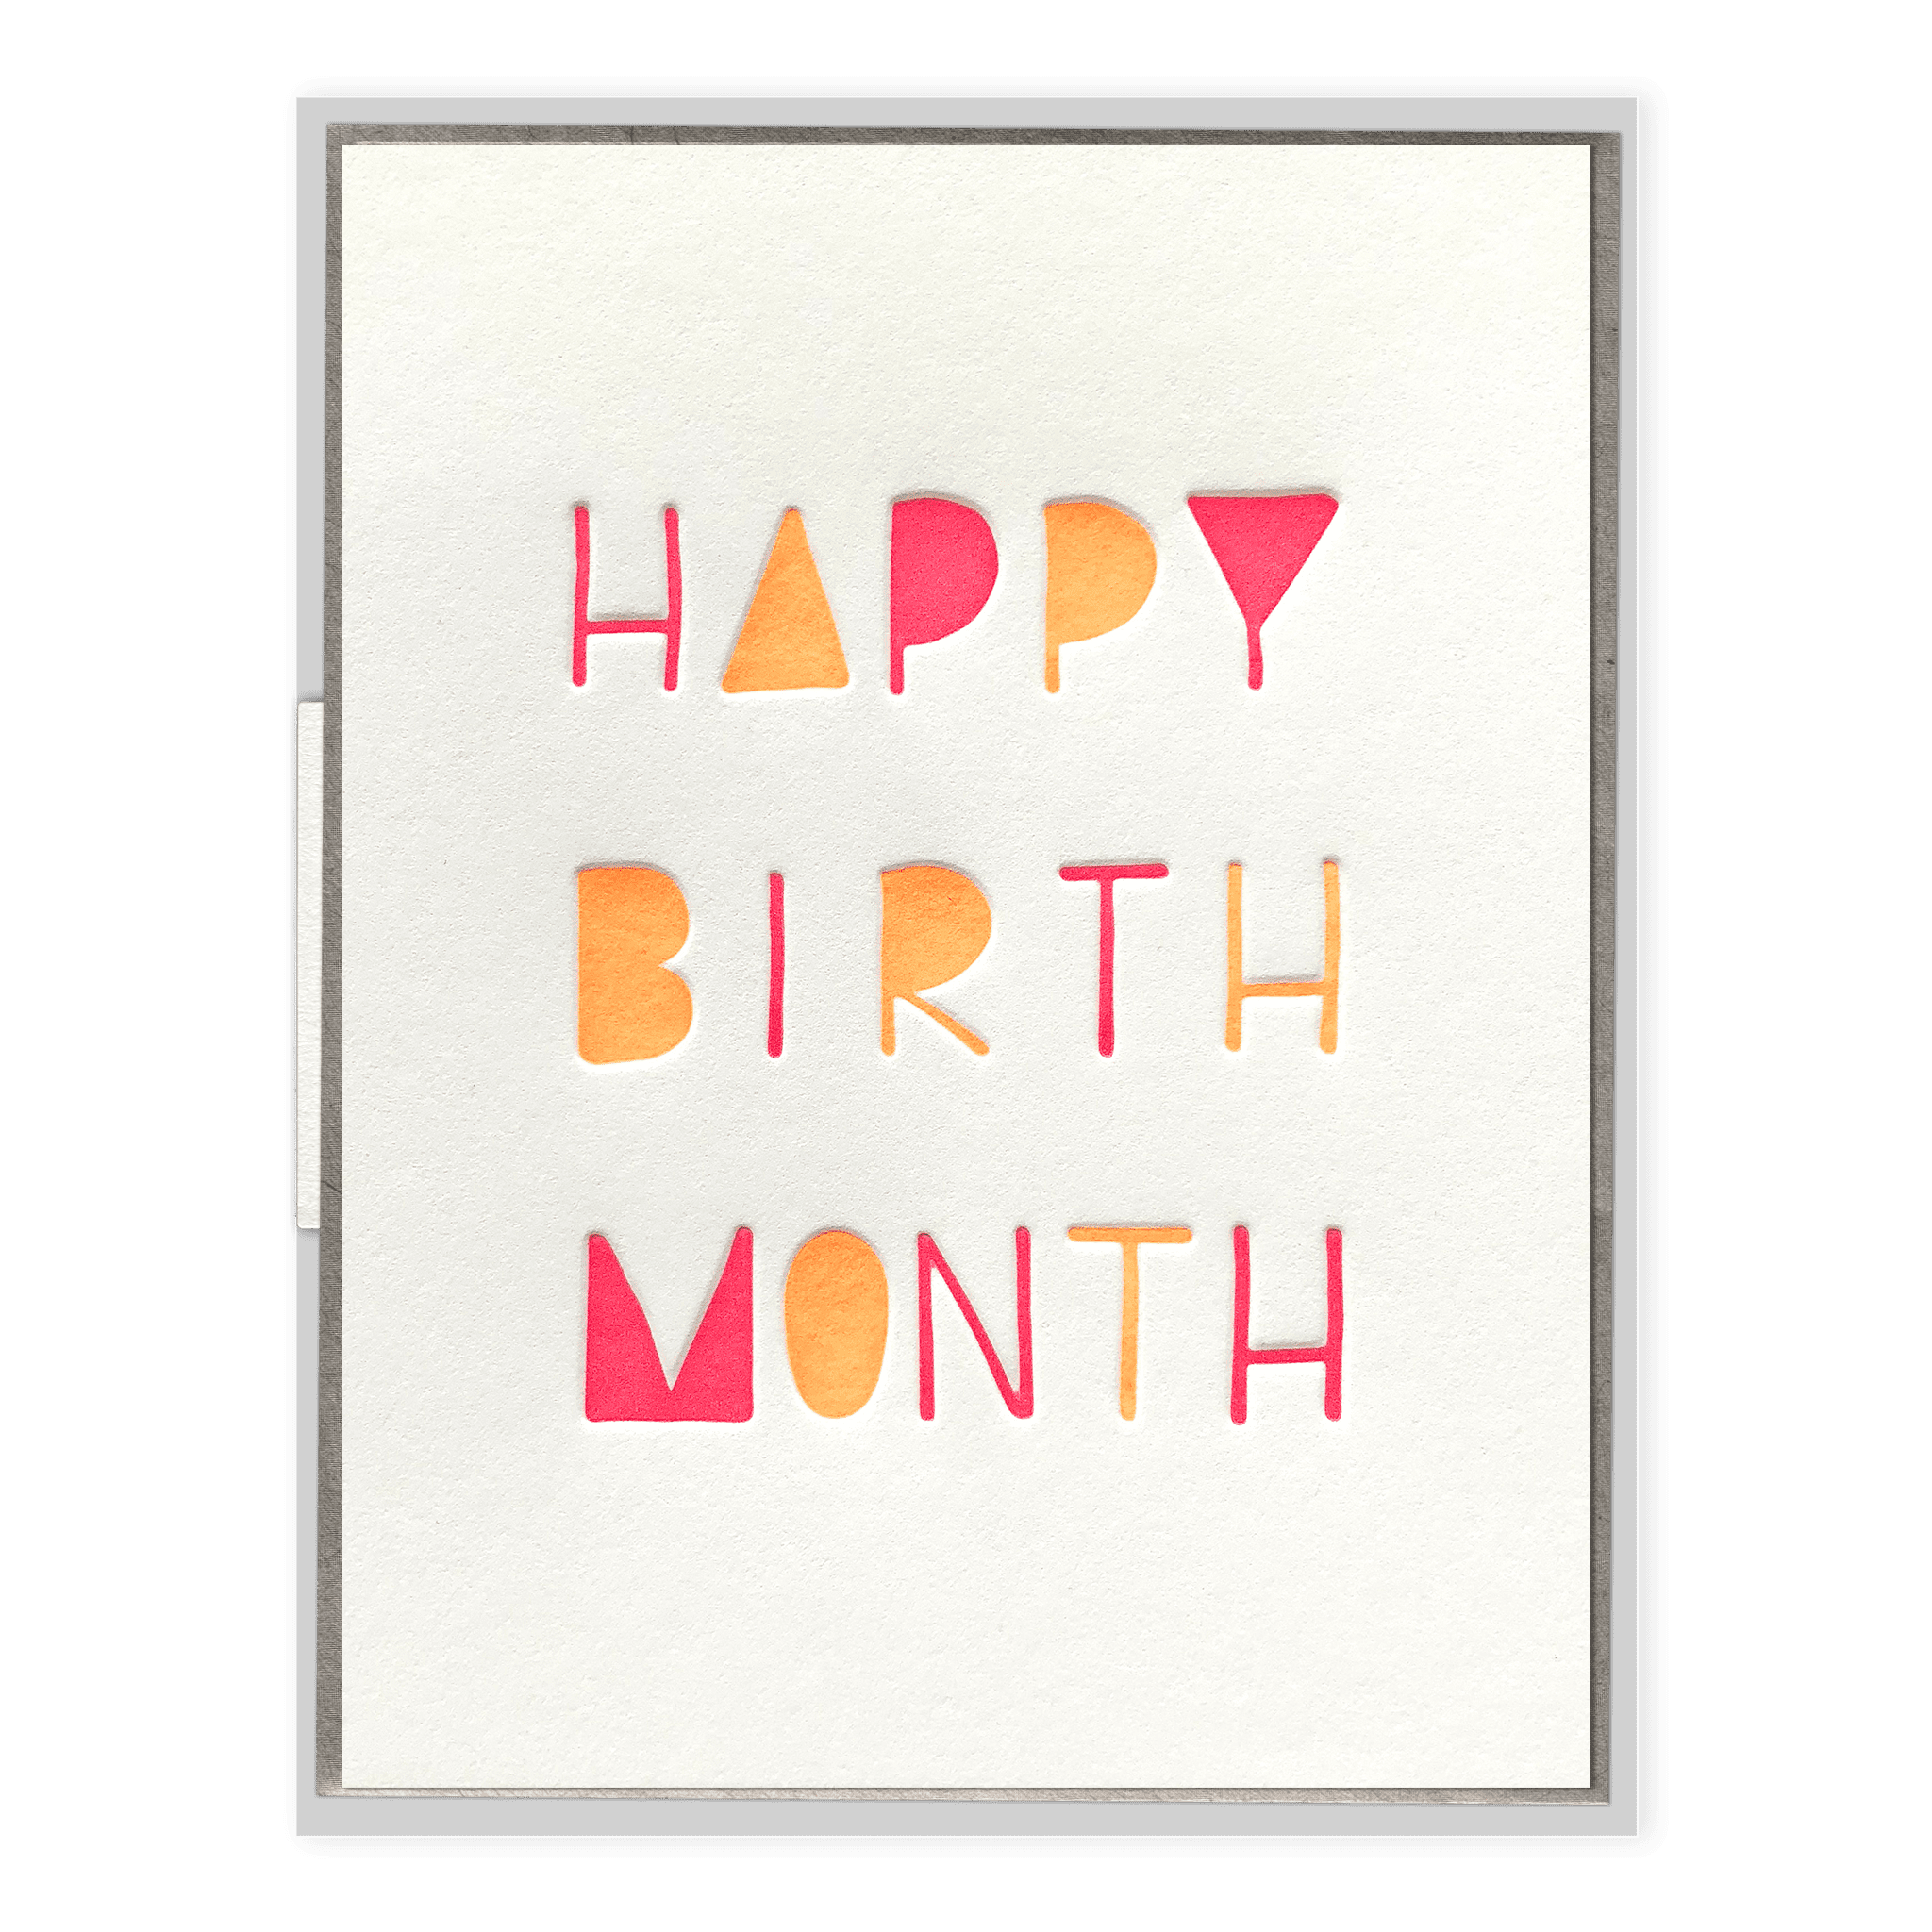 Birthday Month Wishes